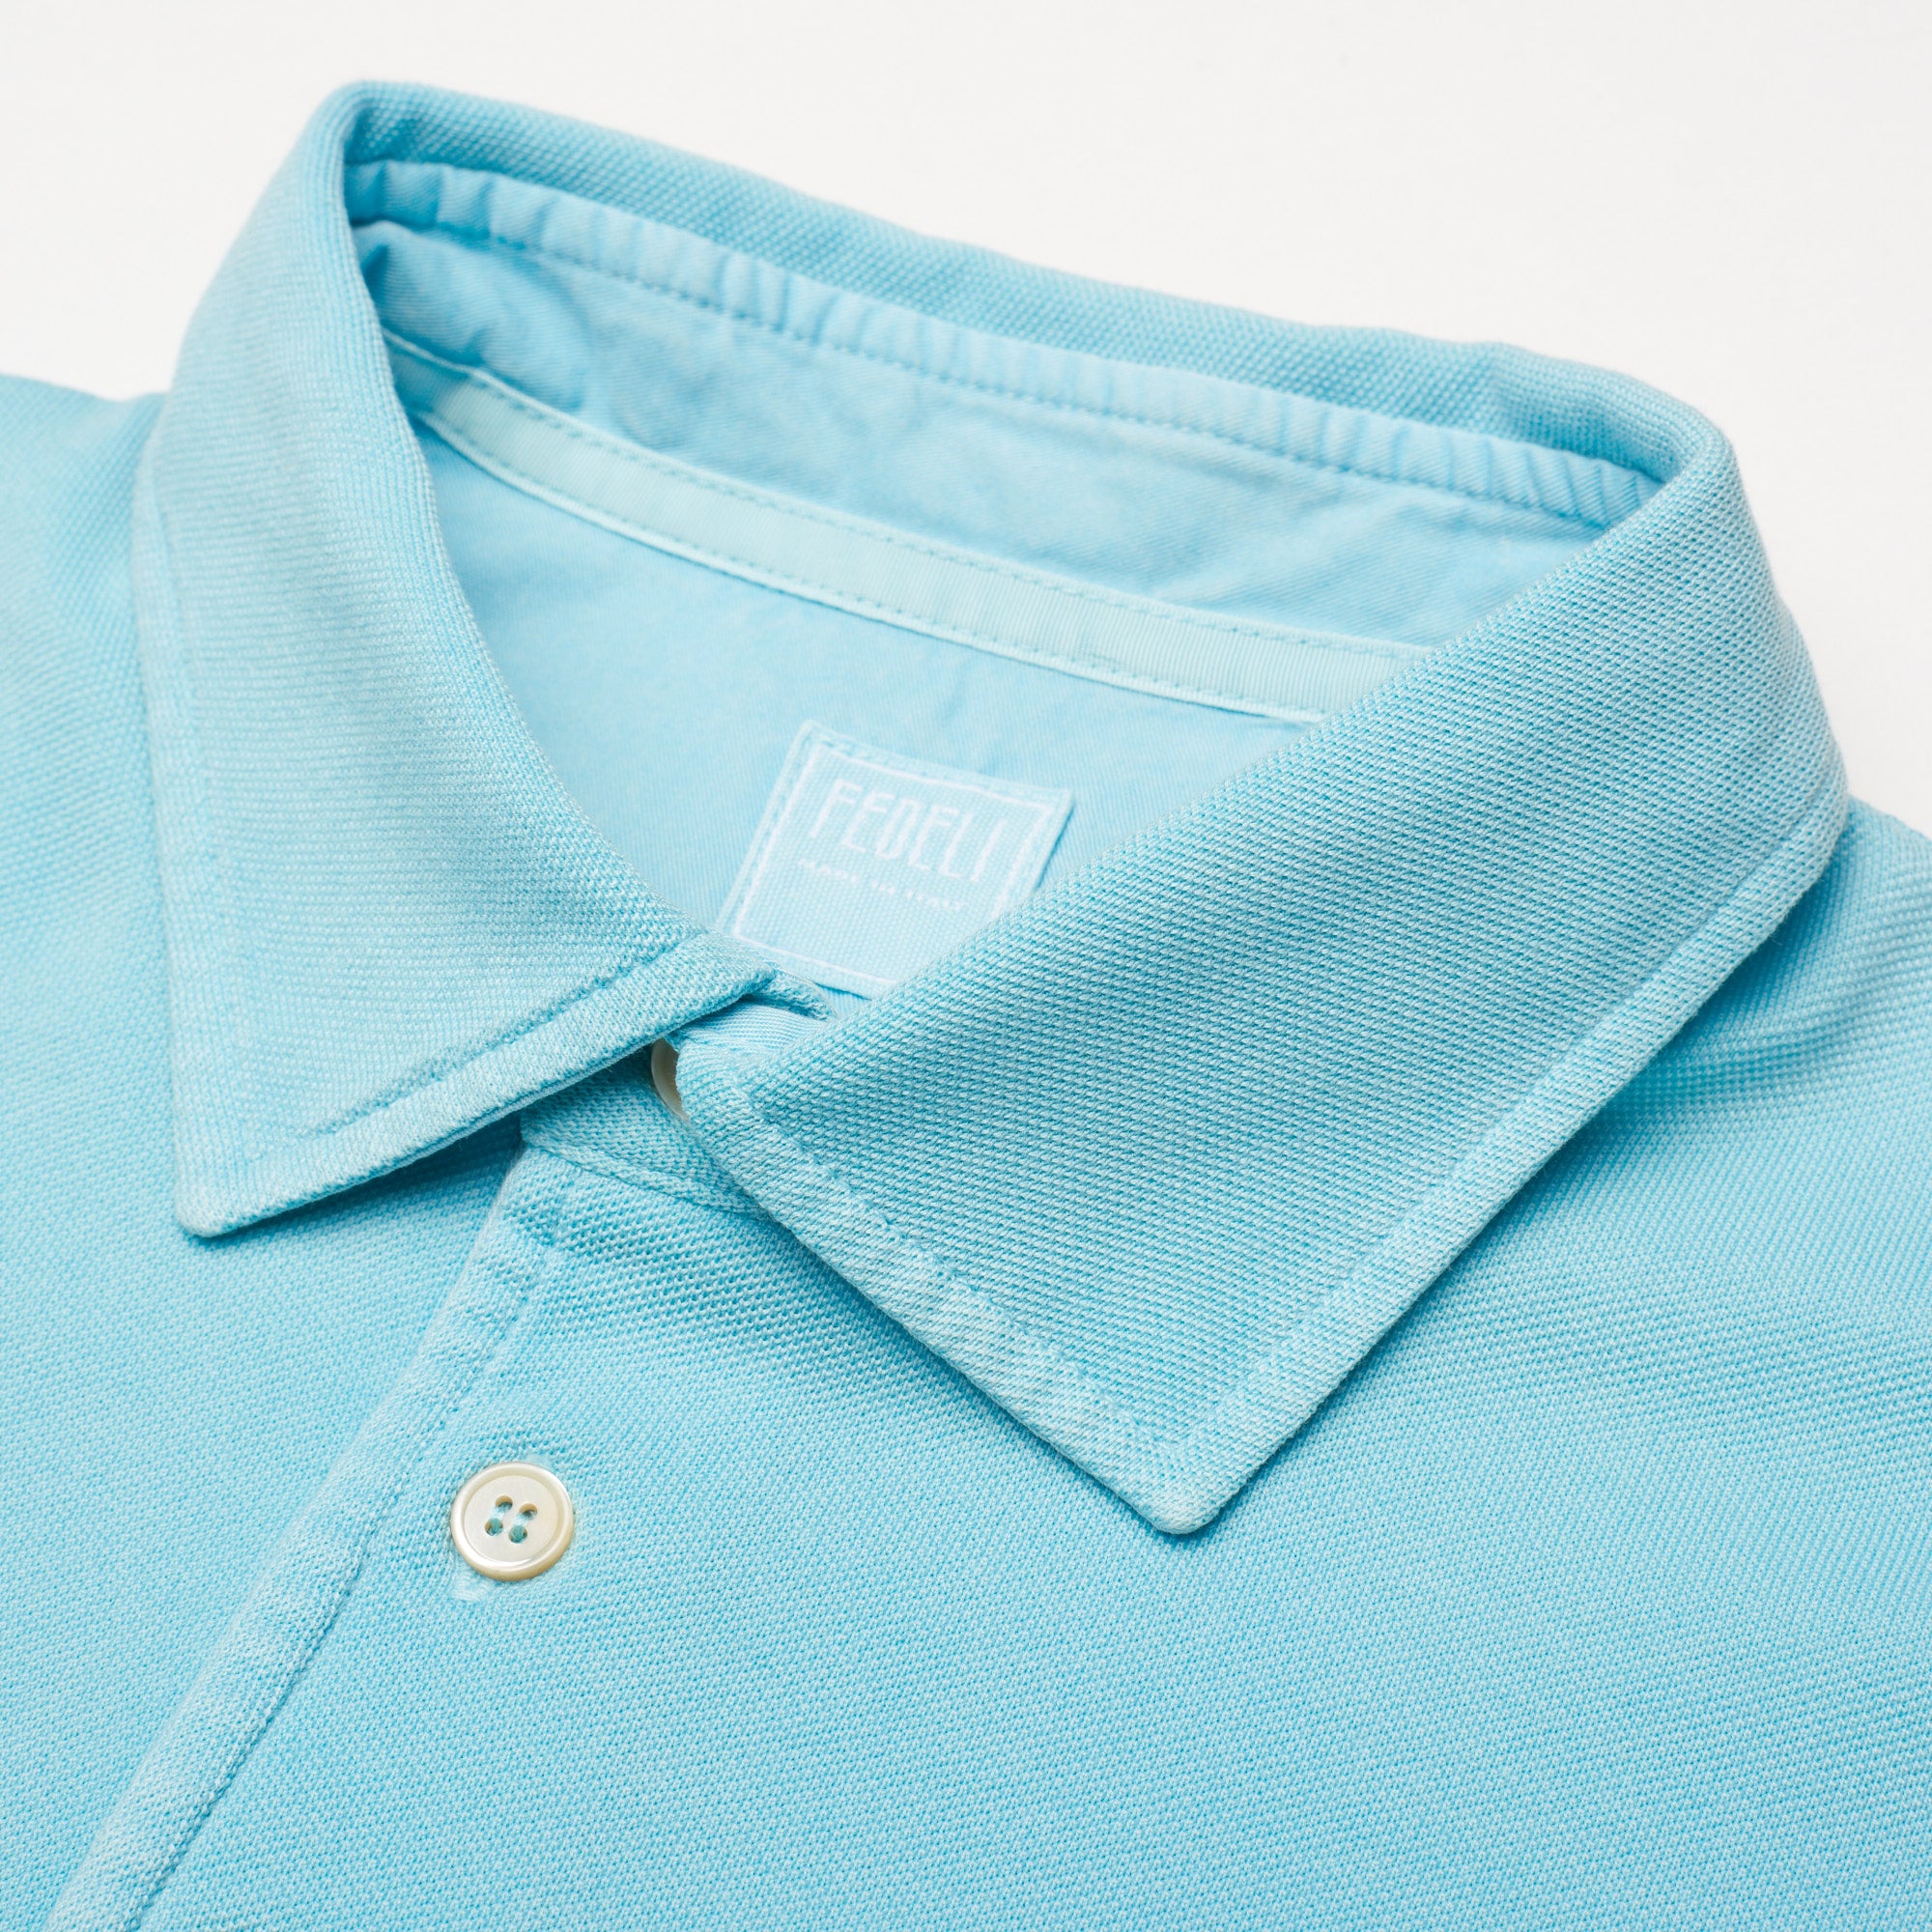 FEDELI "North" Turquoise Cotton Pique Short Sleeve Polo Shirt EU 50 NEW US M FEDELI